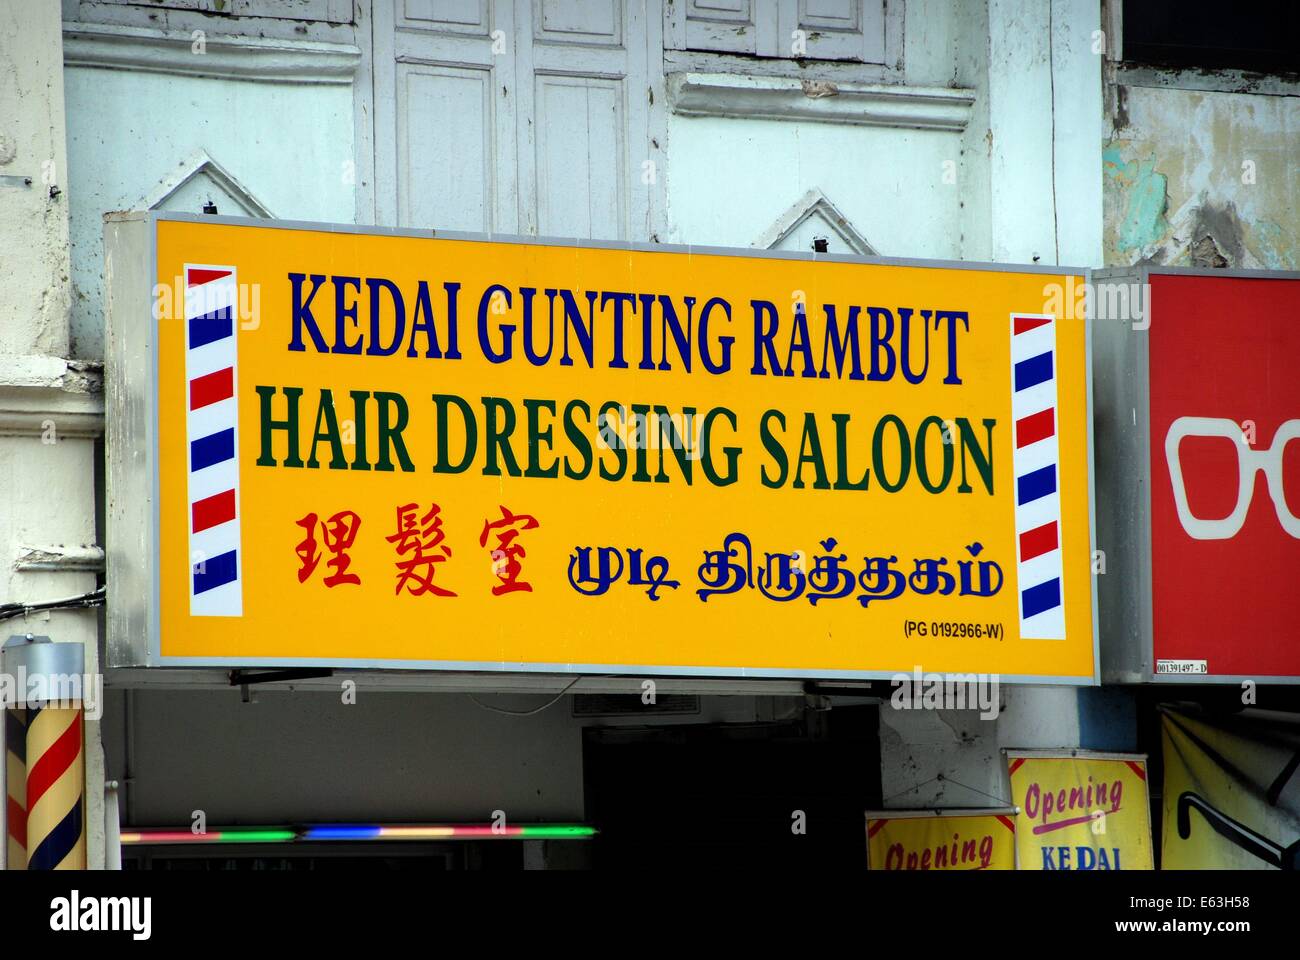 GEORGETOWN, MALASIA: salón de belleza firmar con ortografía incorrecta se llama a sí mismo un "saloon" en Jalan Dato Keramat Foto de stock